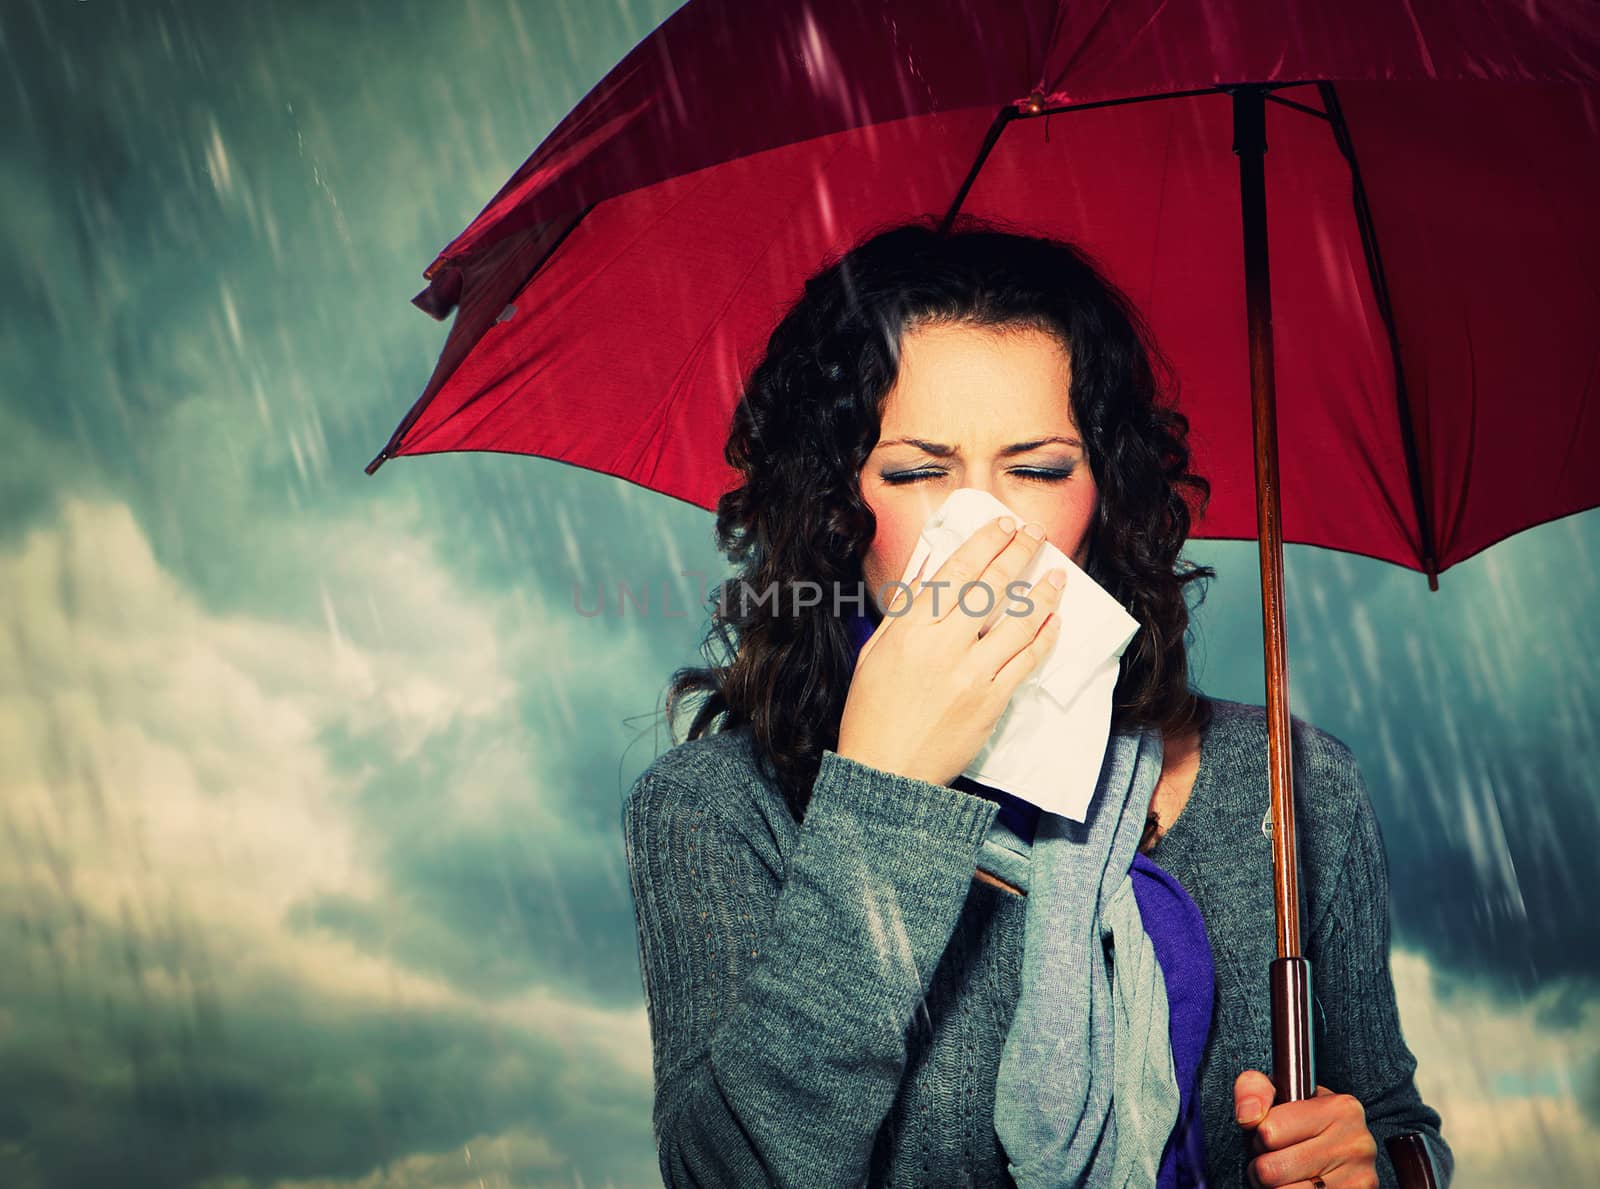 Sneezing Woman with Umbrella over Autumn Rain Background by SubbotinaA